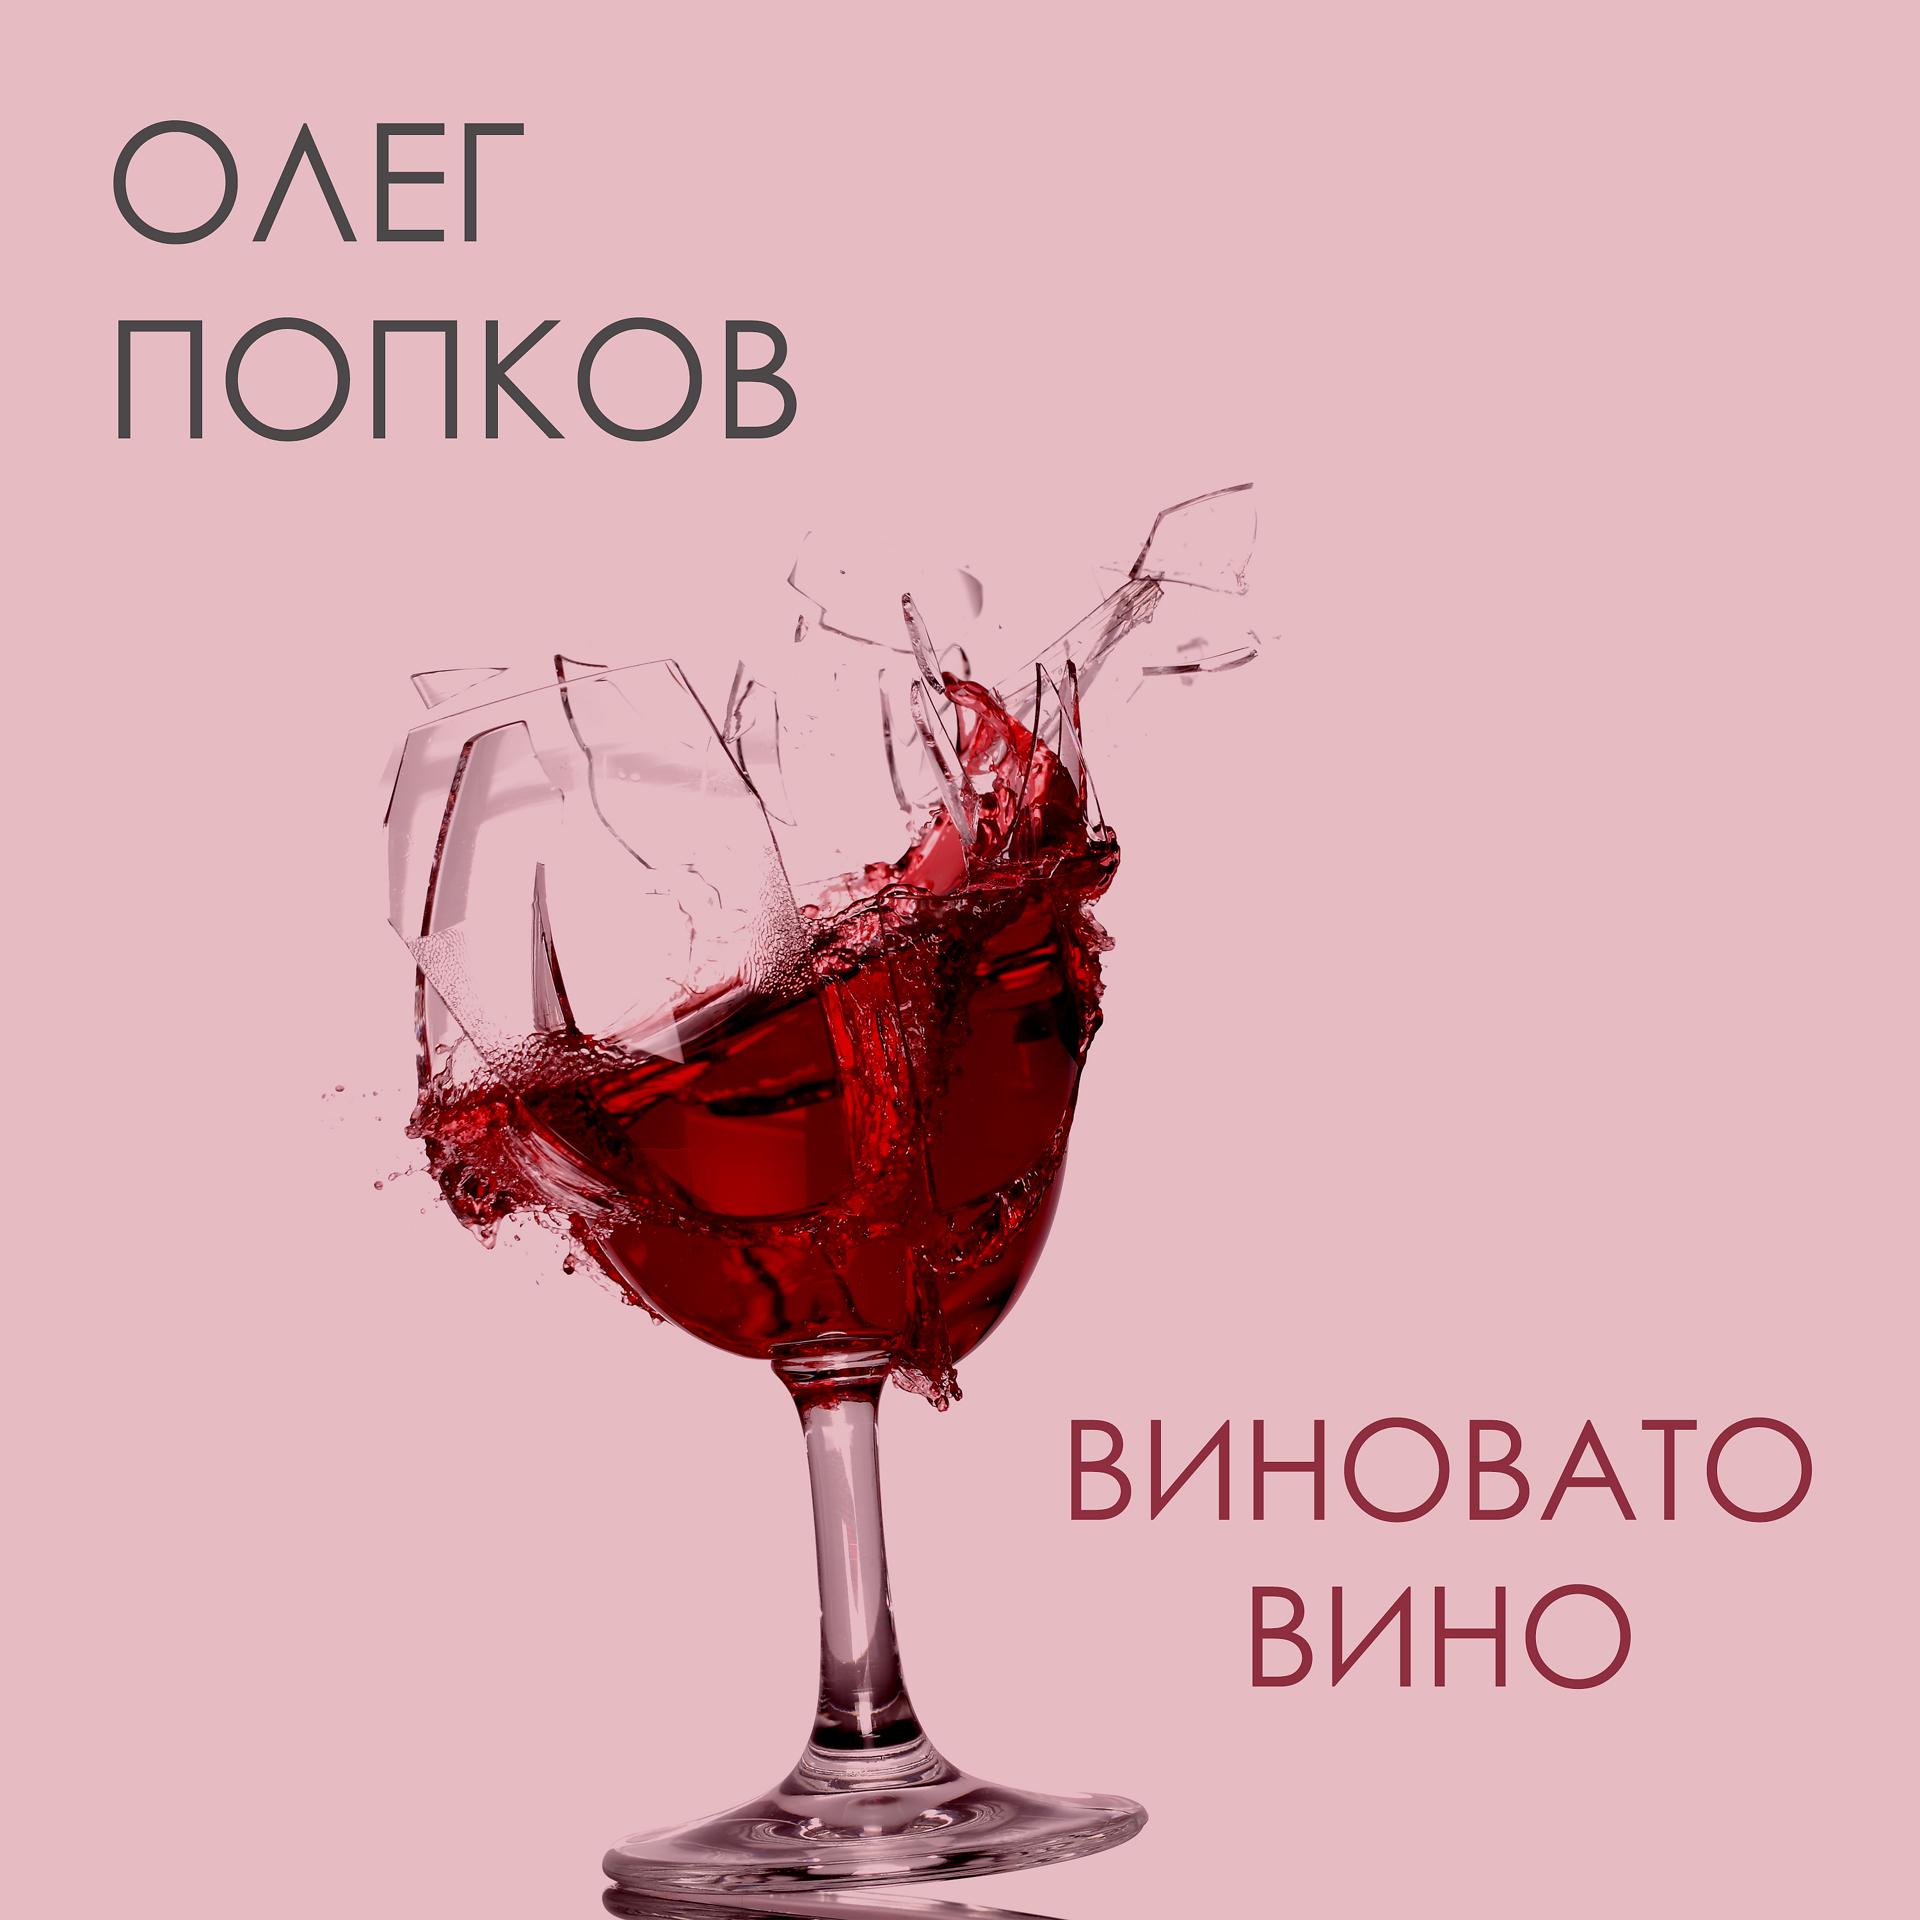 Вино помогает слушать. Вино обложка. Вино Oleg. Вино виновато. Слово вино.